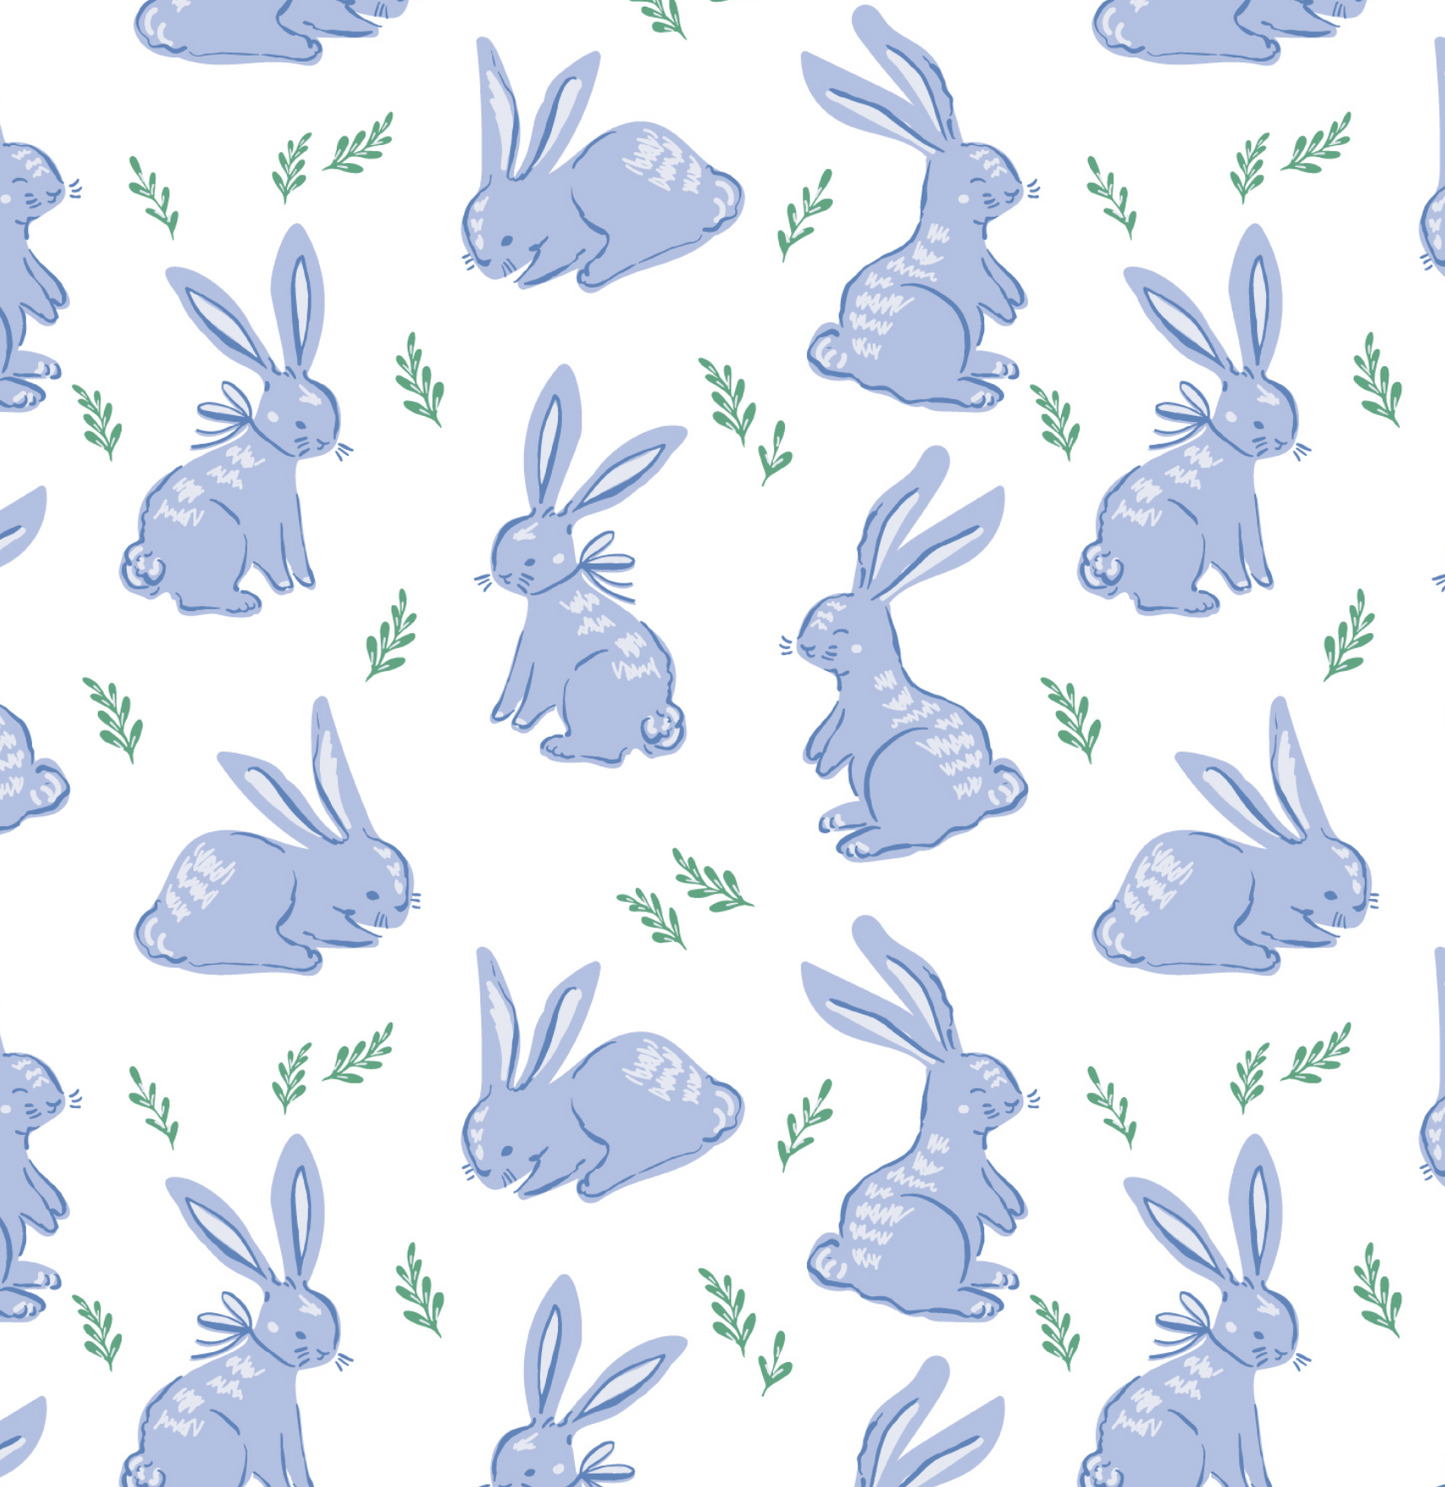 Jack Pajama Set- Bunny Hop Blue